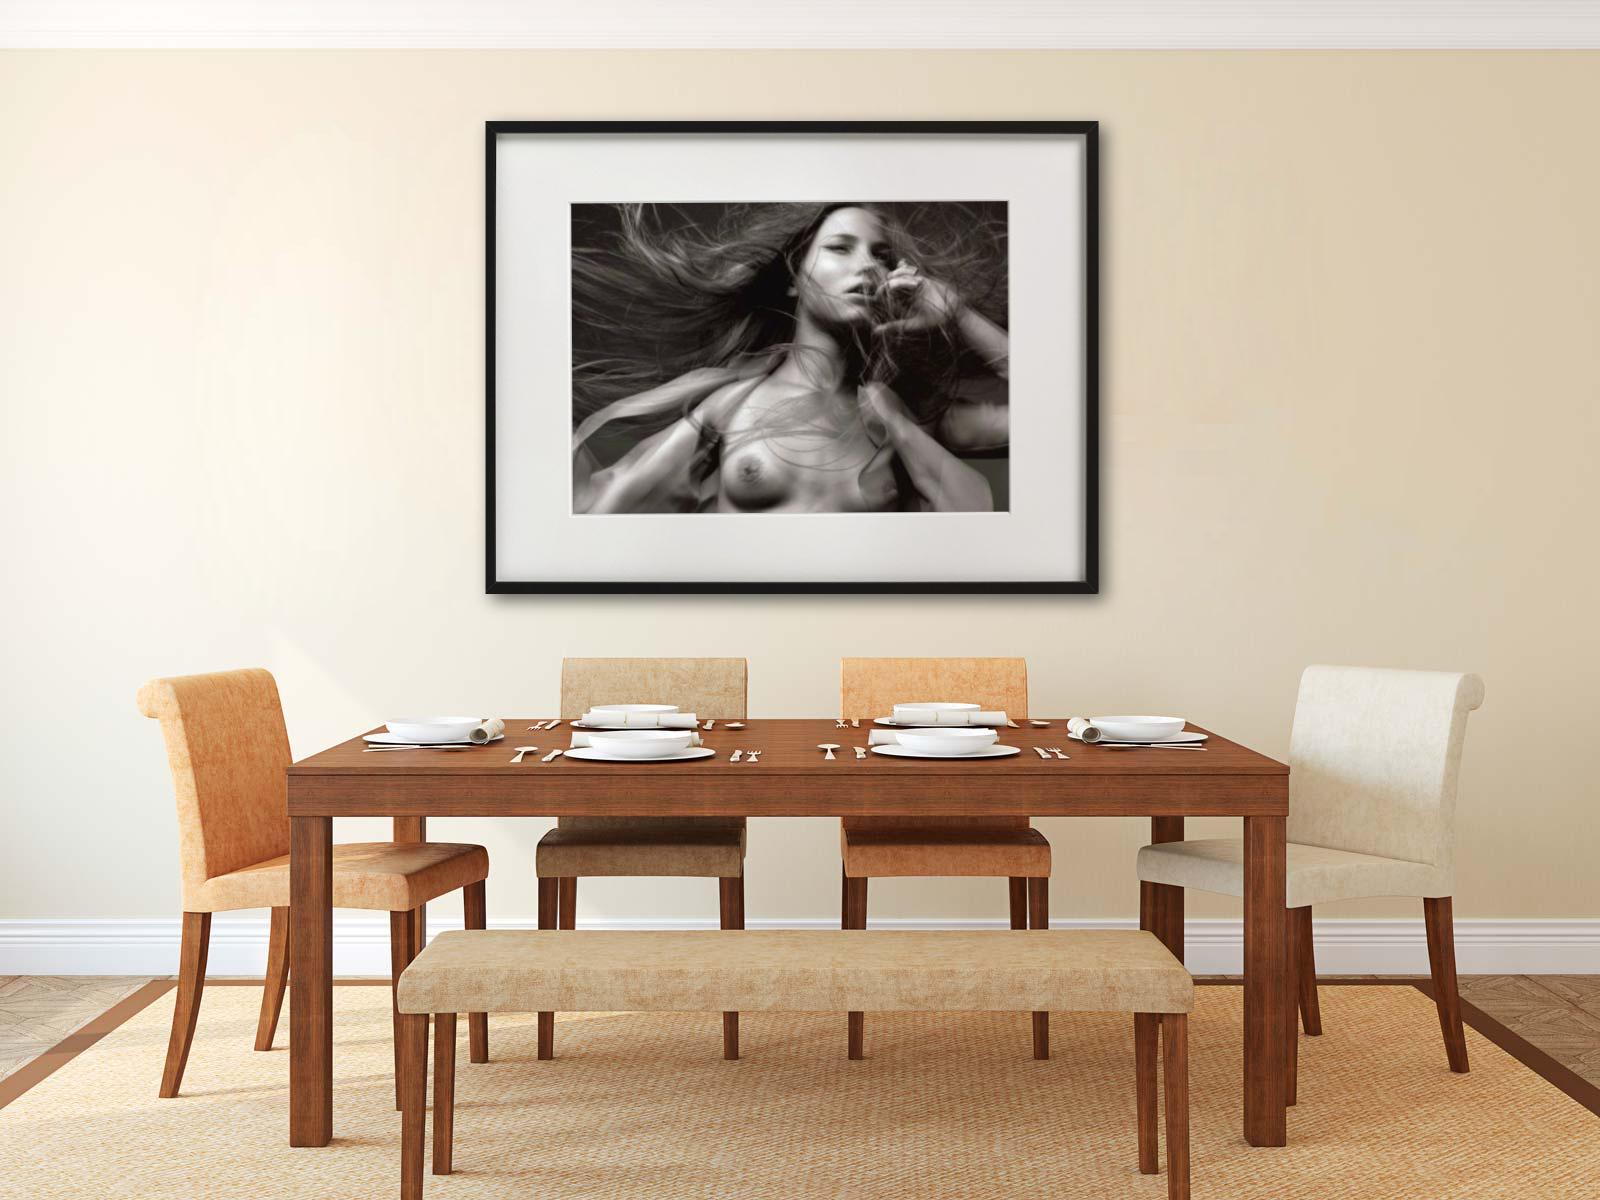 American Nude - double exposure portrait, fine art photography, 2000 - Photograph by Michel Comte